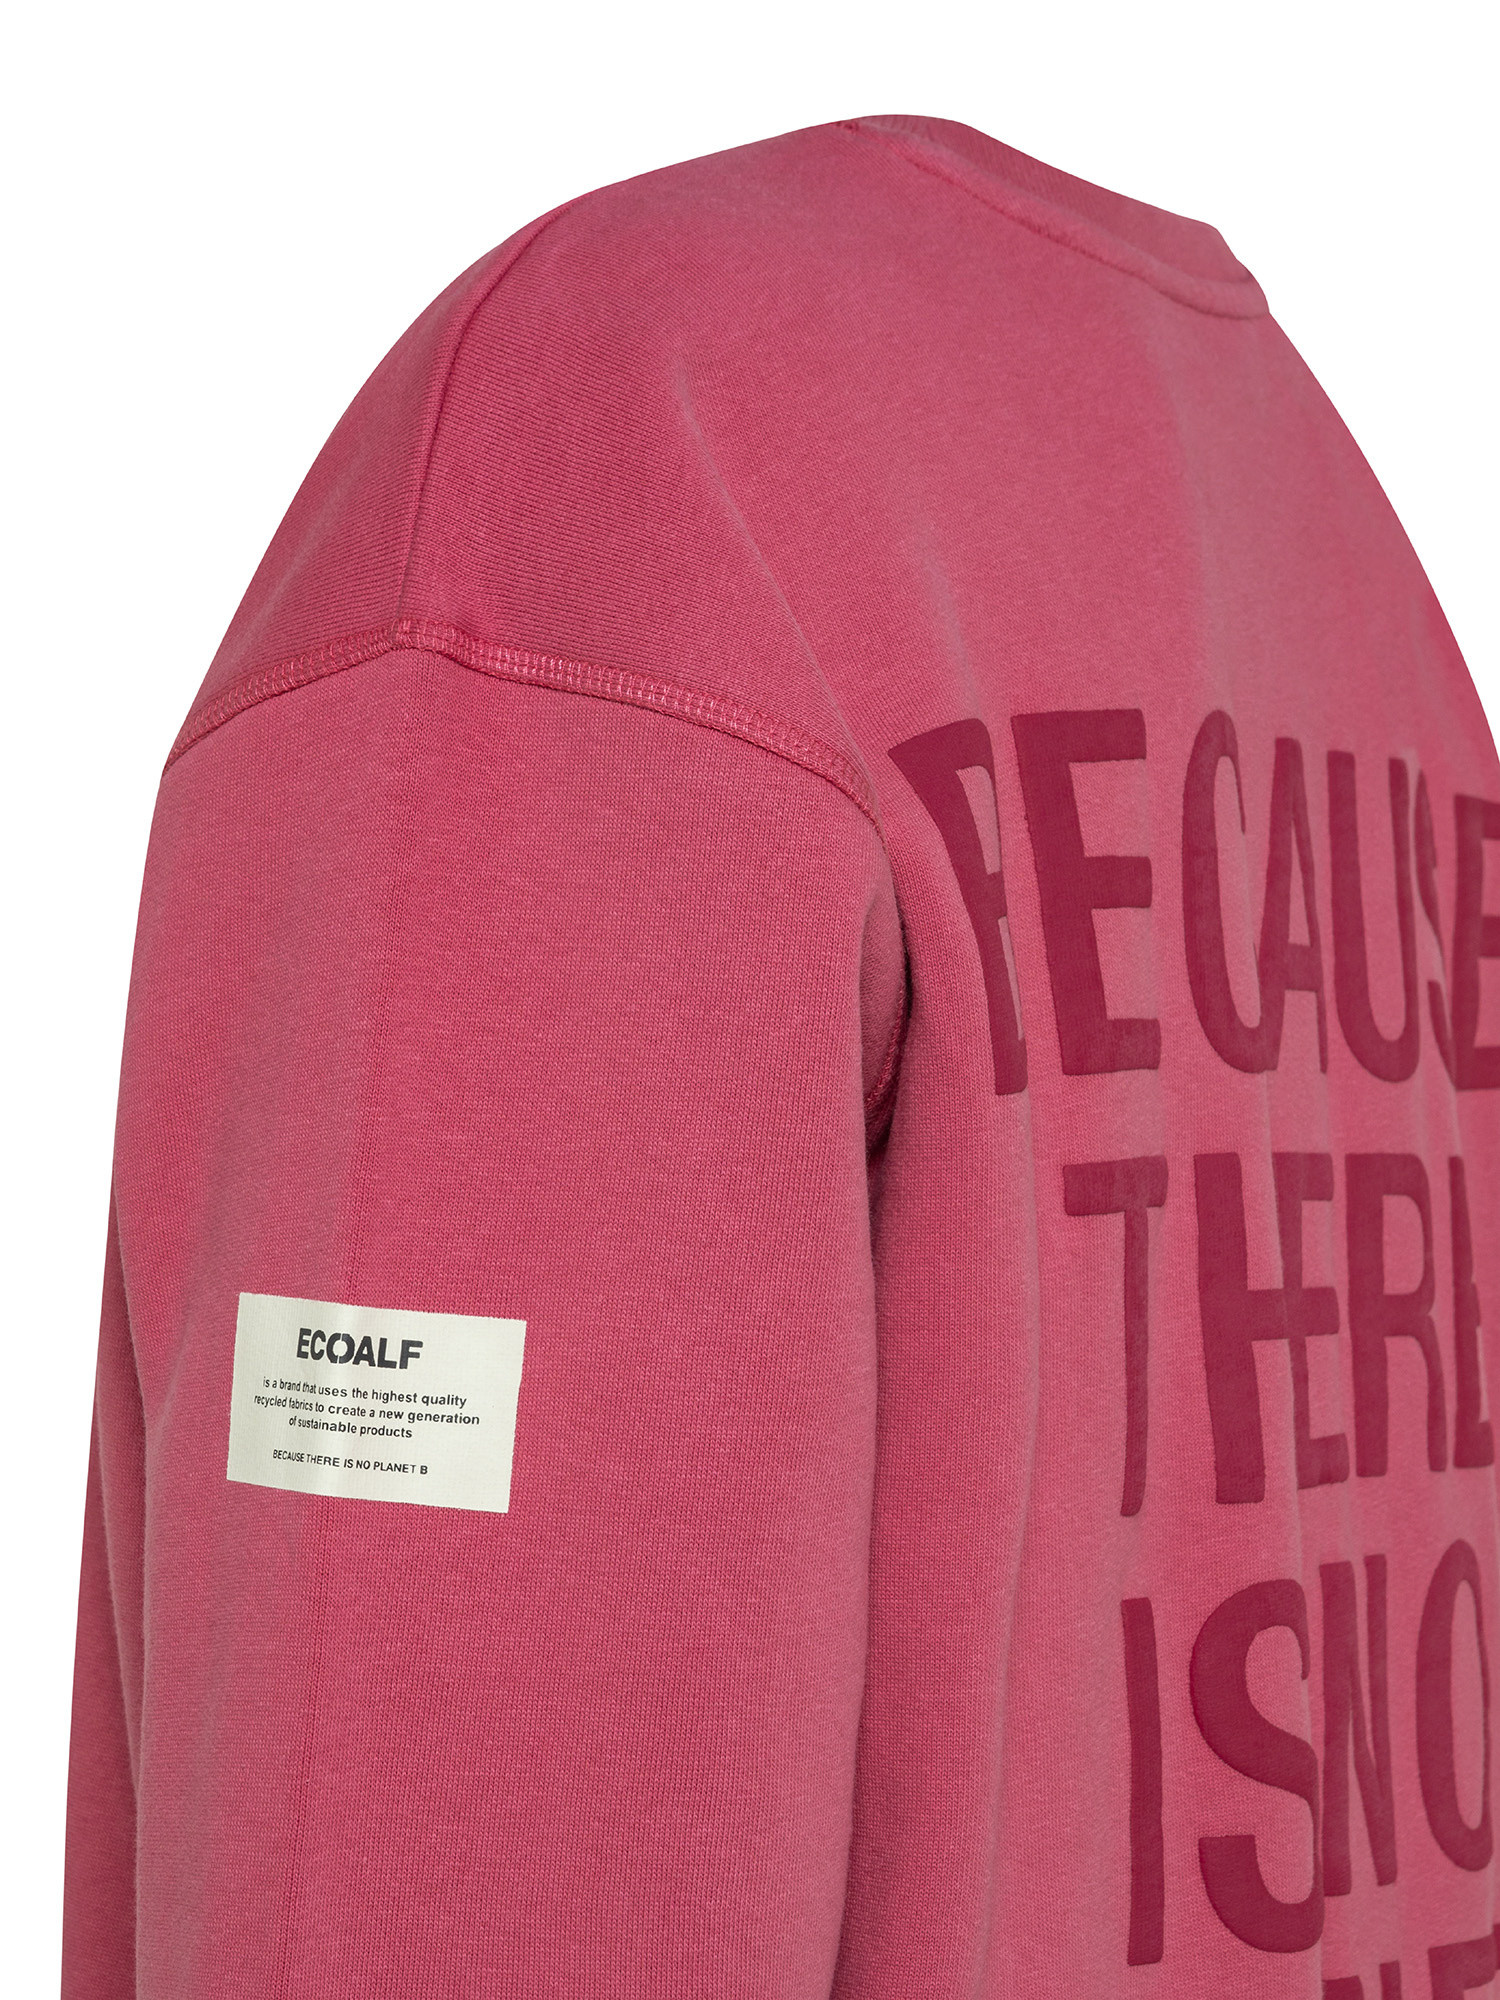 Ecoalf - Storm sweatshirt with print, Dark Pink, large image number 2